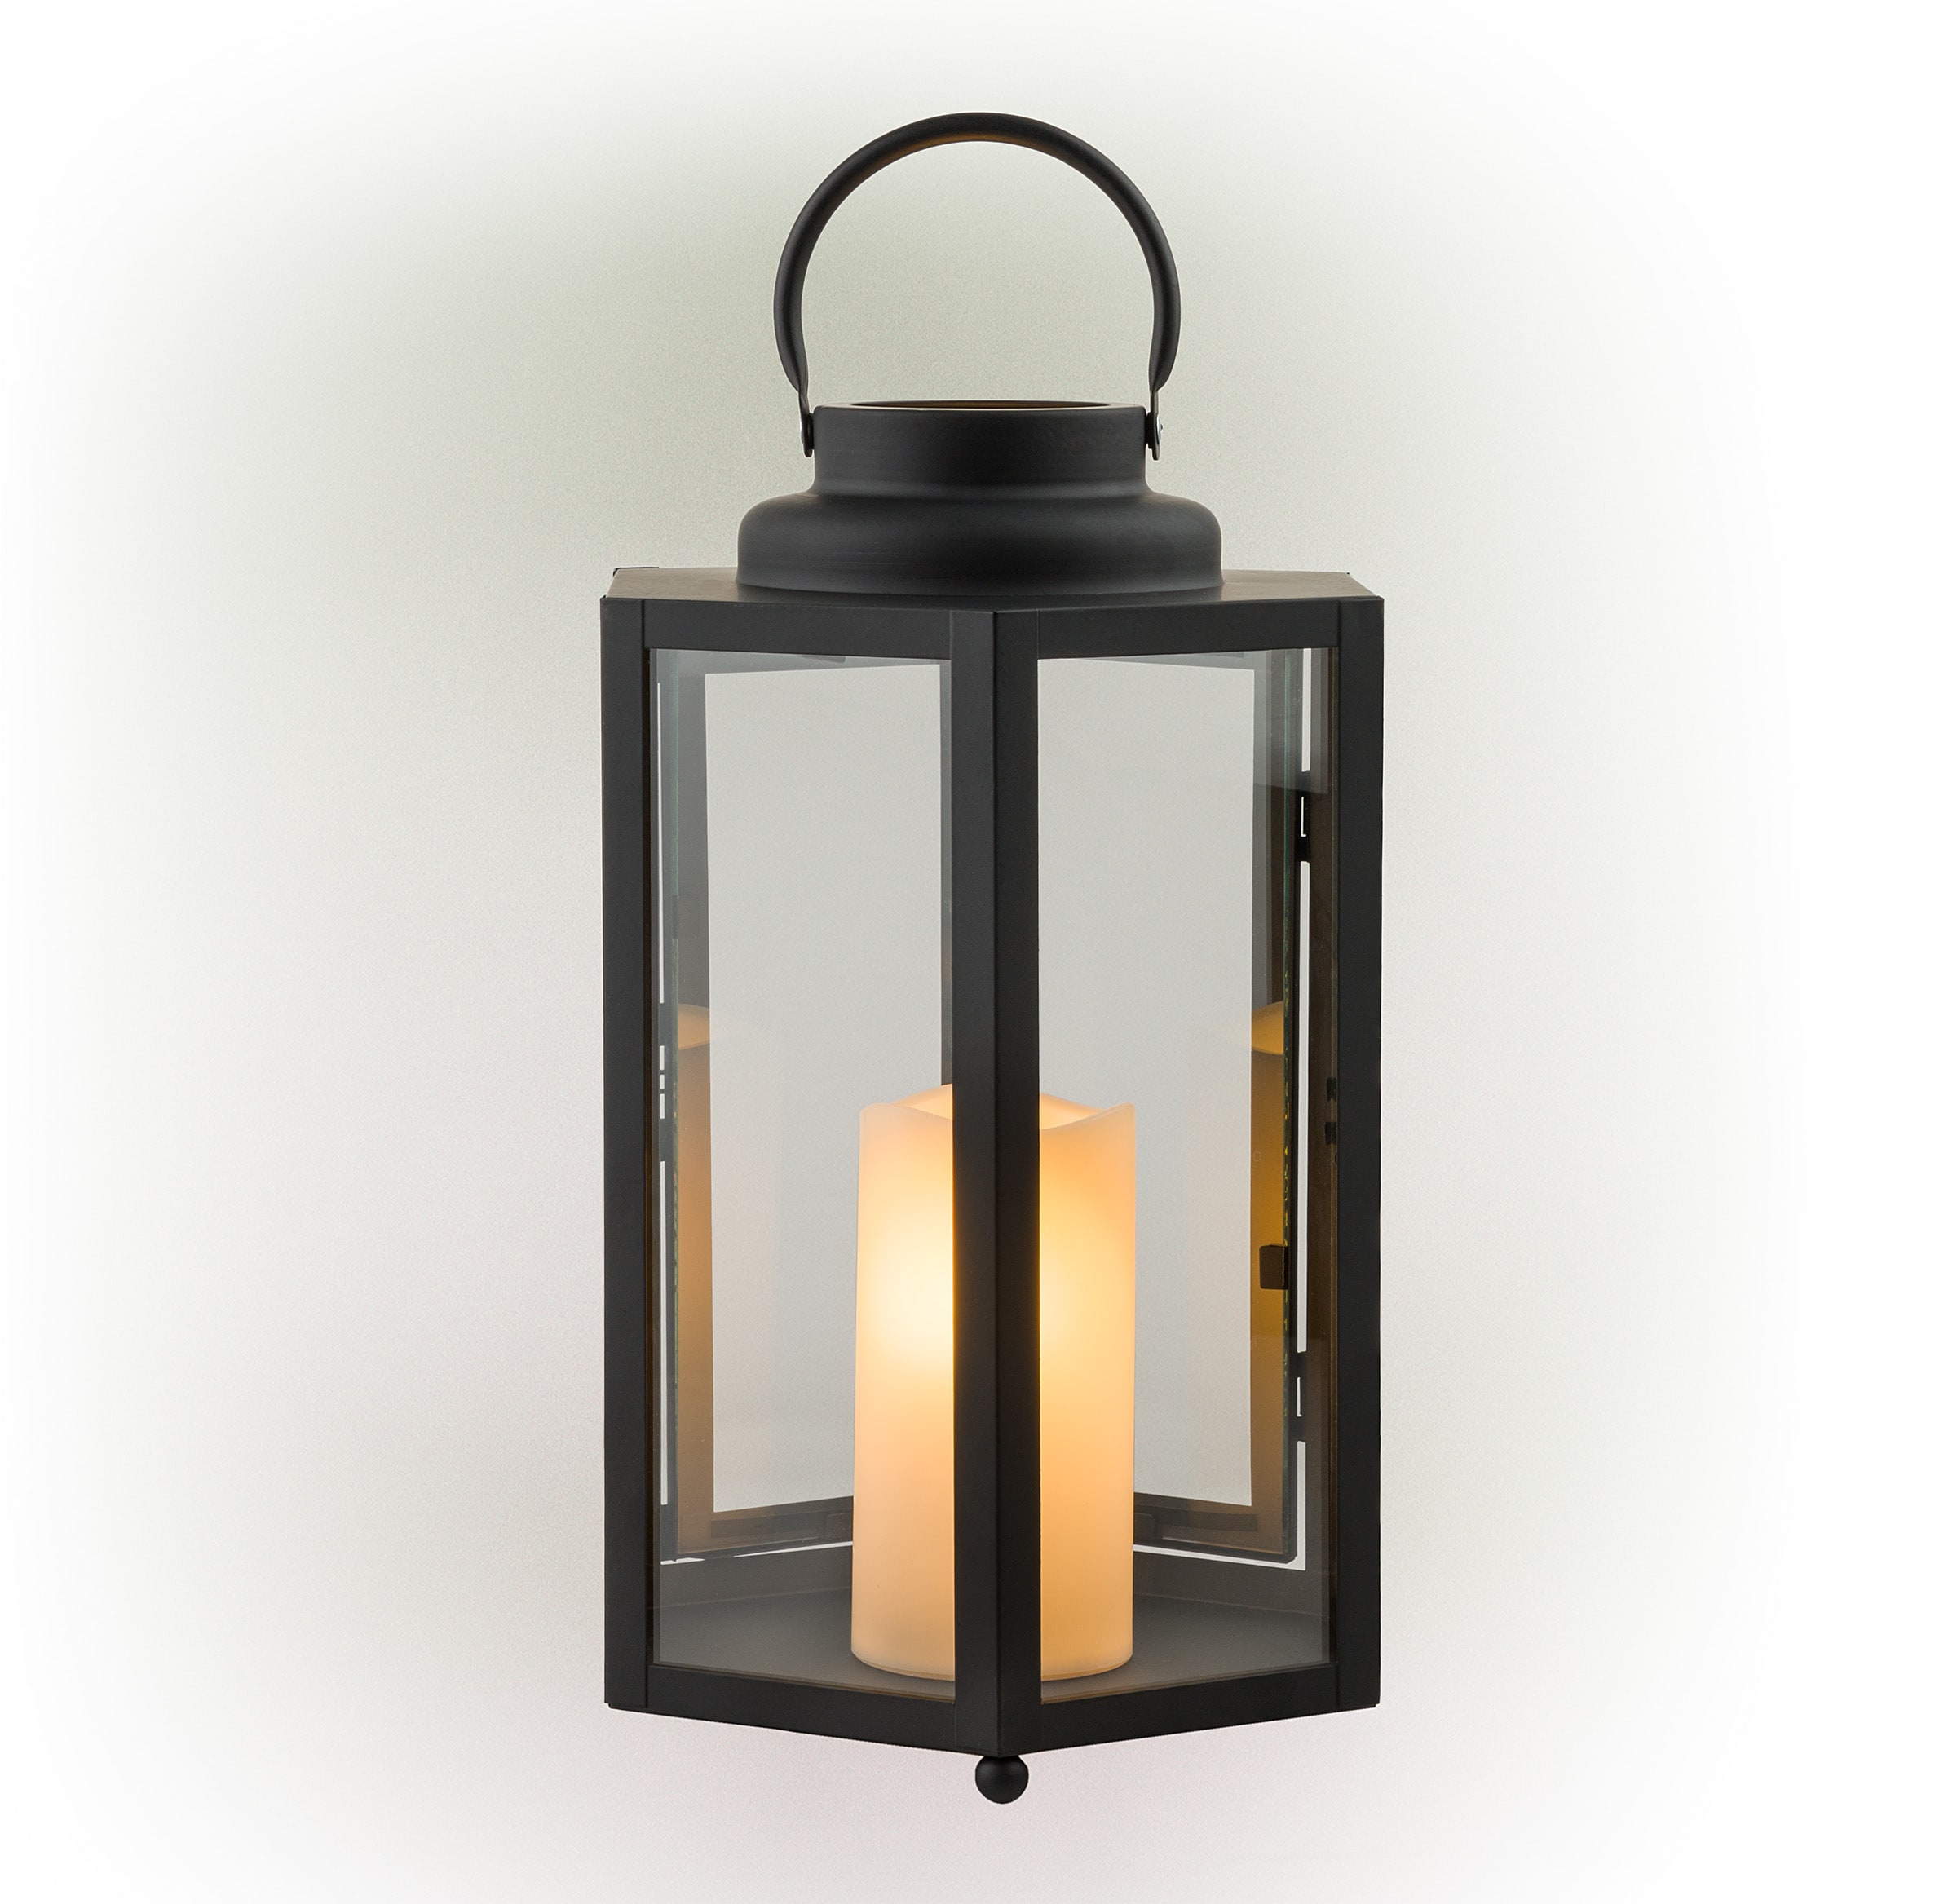 10 LED Black Tea Light Candle Lantern String Light, 5.5 FT